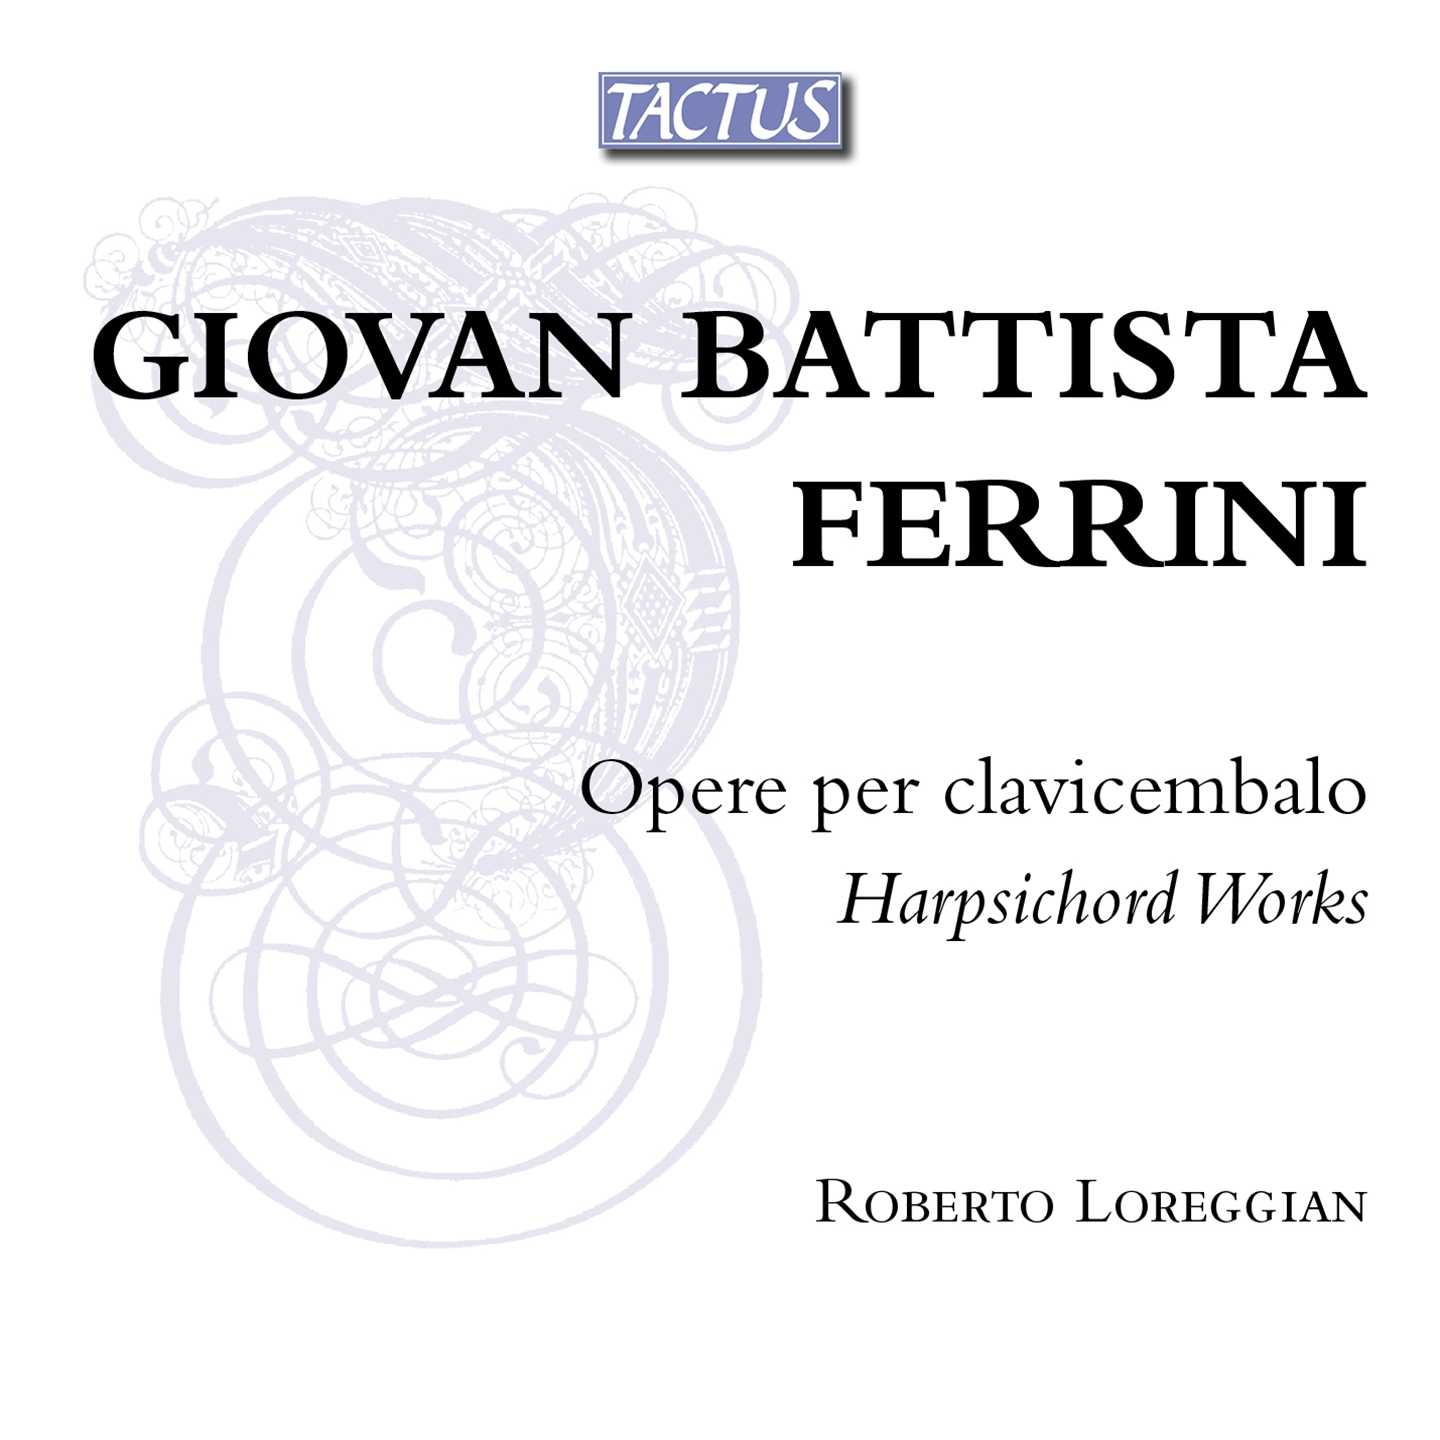 Roberto Loreggian - Ferrini: Harpsichord Works - Foto 1 di 1